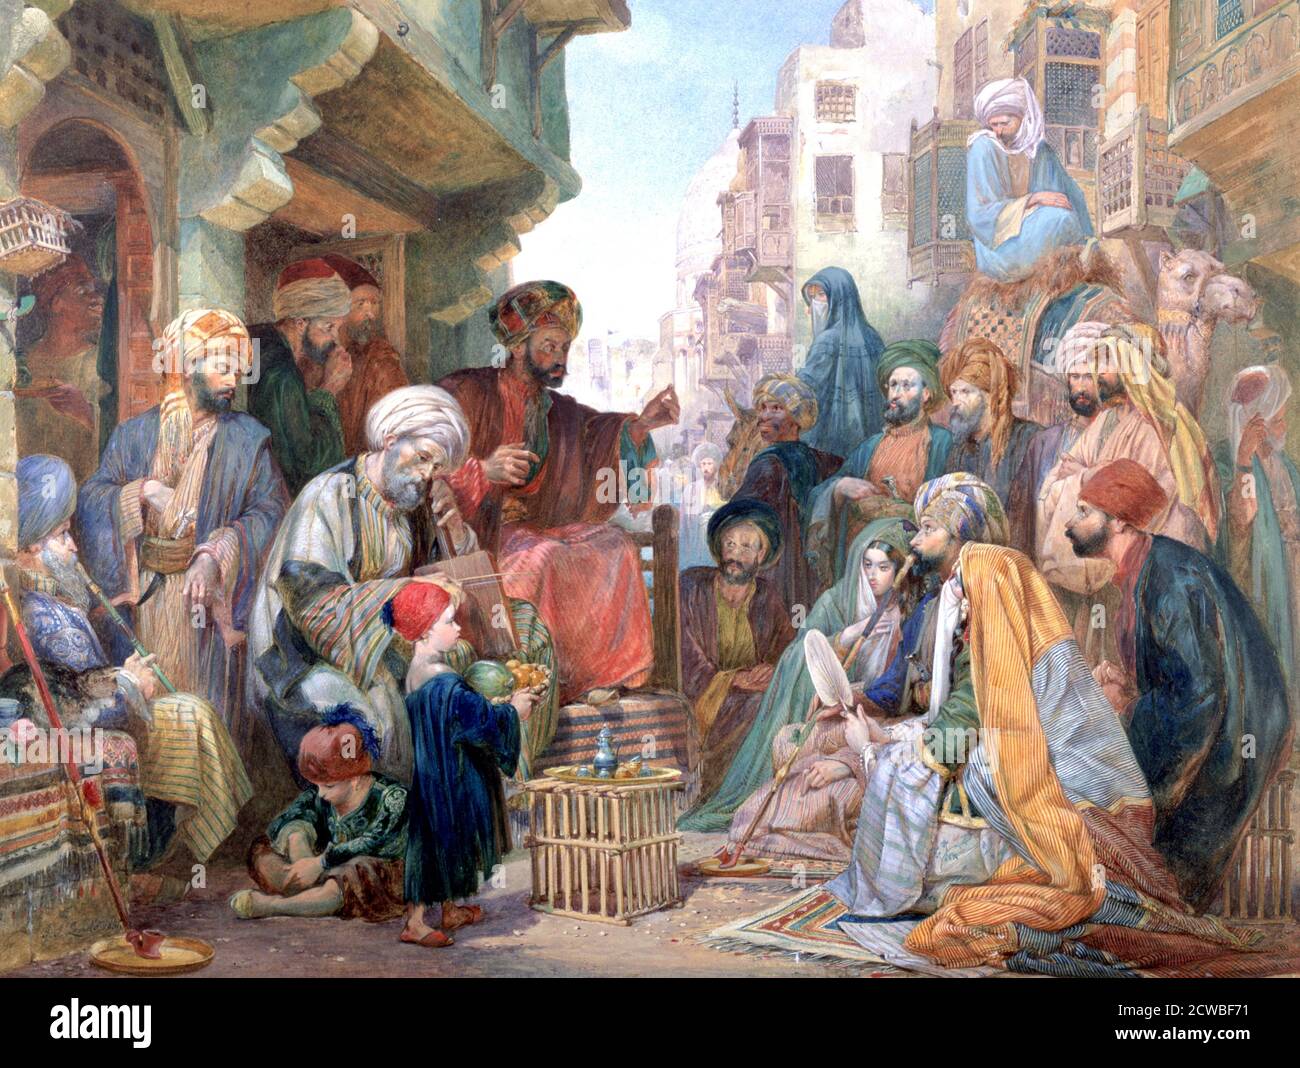 A Street in Cairo, Egypt', c1825-1876. Artiste: John Frederick Lewis. John Frederick Lewis RA (c1804-1876) était un peintre orientaliste anglais. Banque D'Images